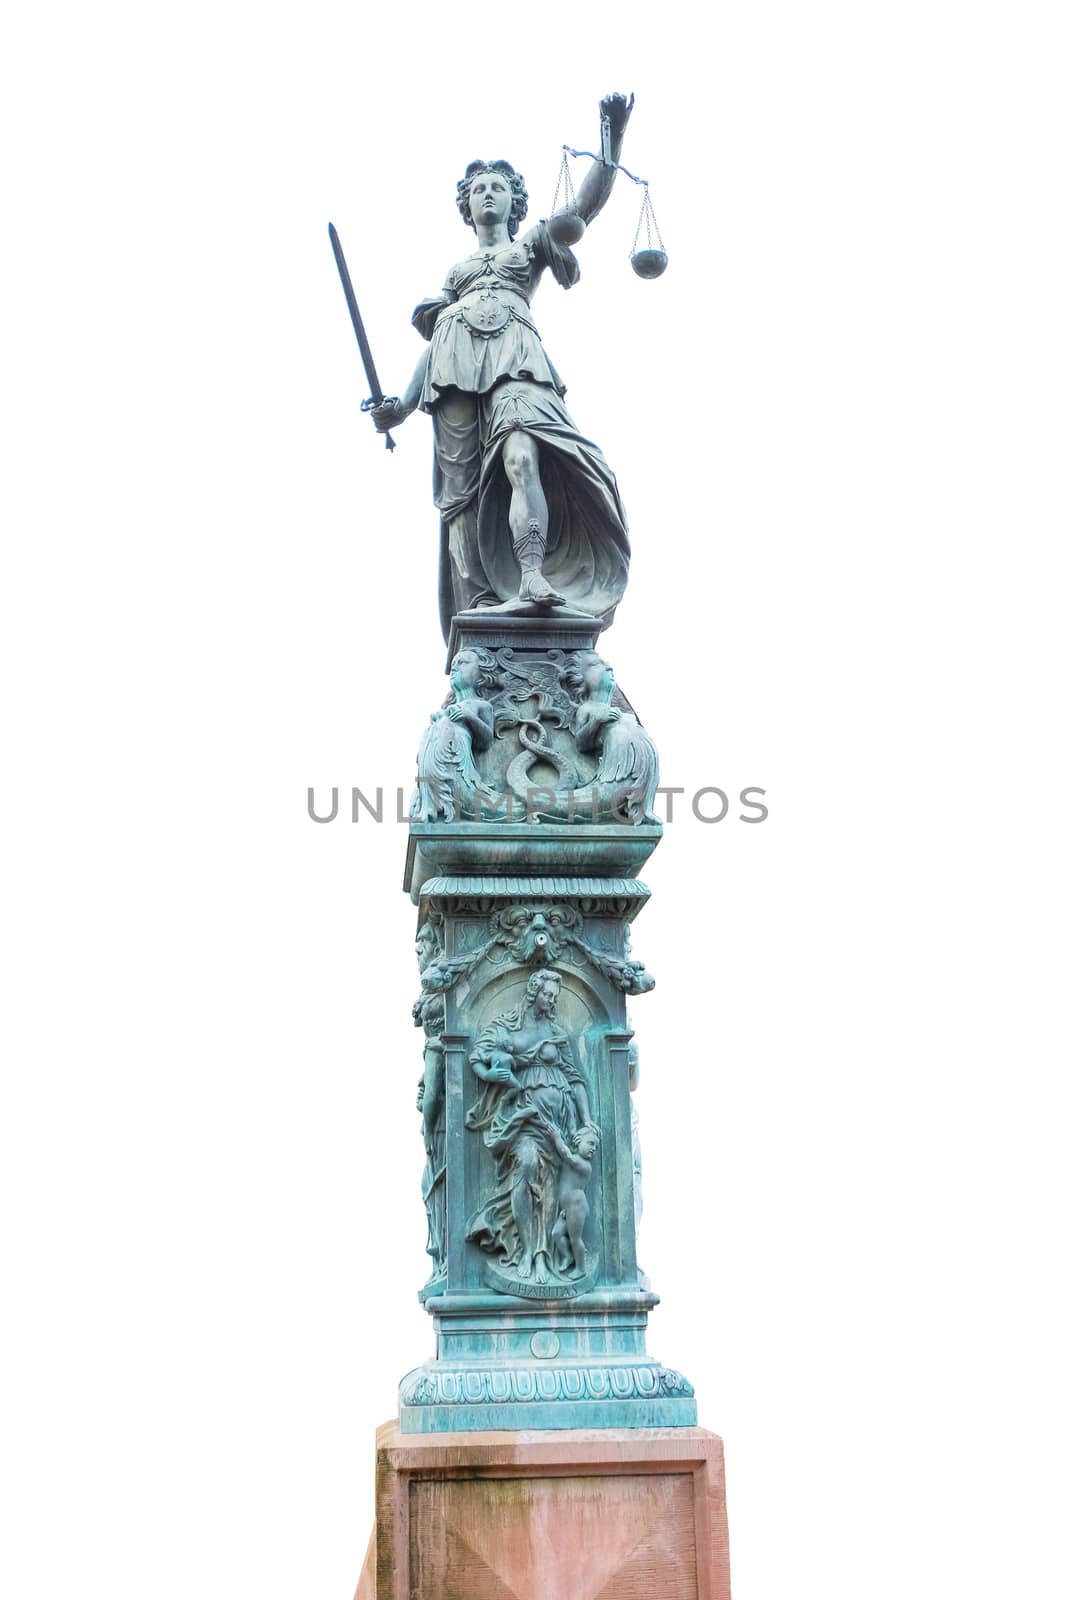 Justitia statue on white background